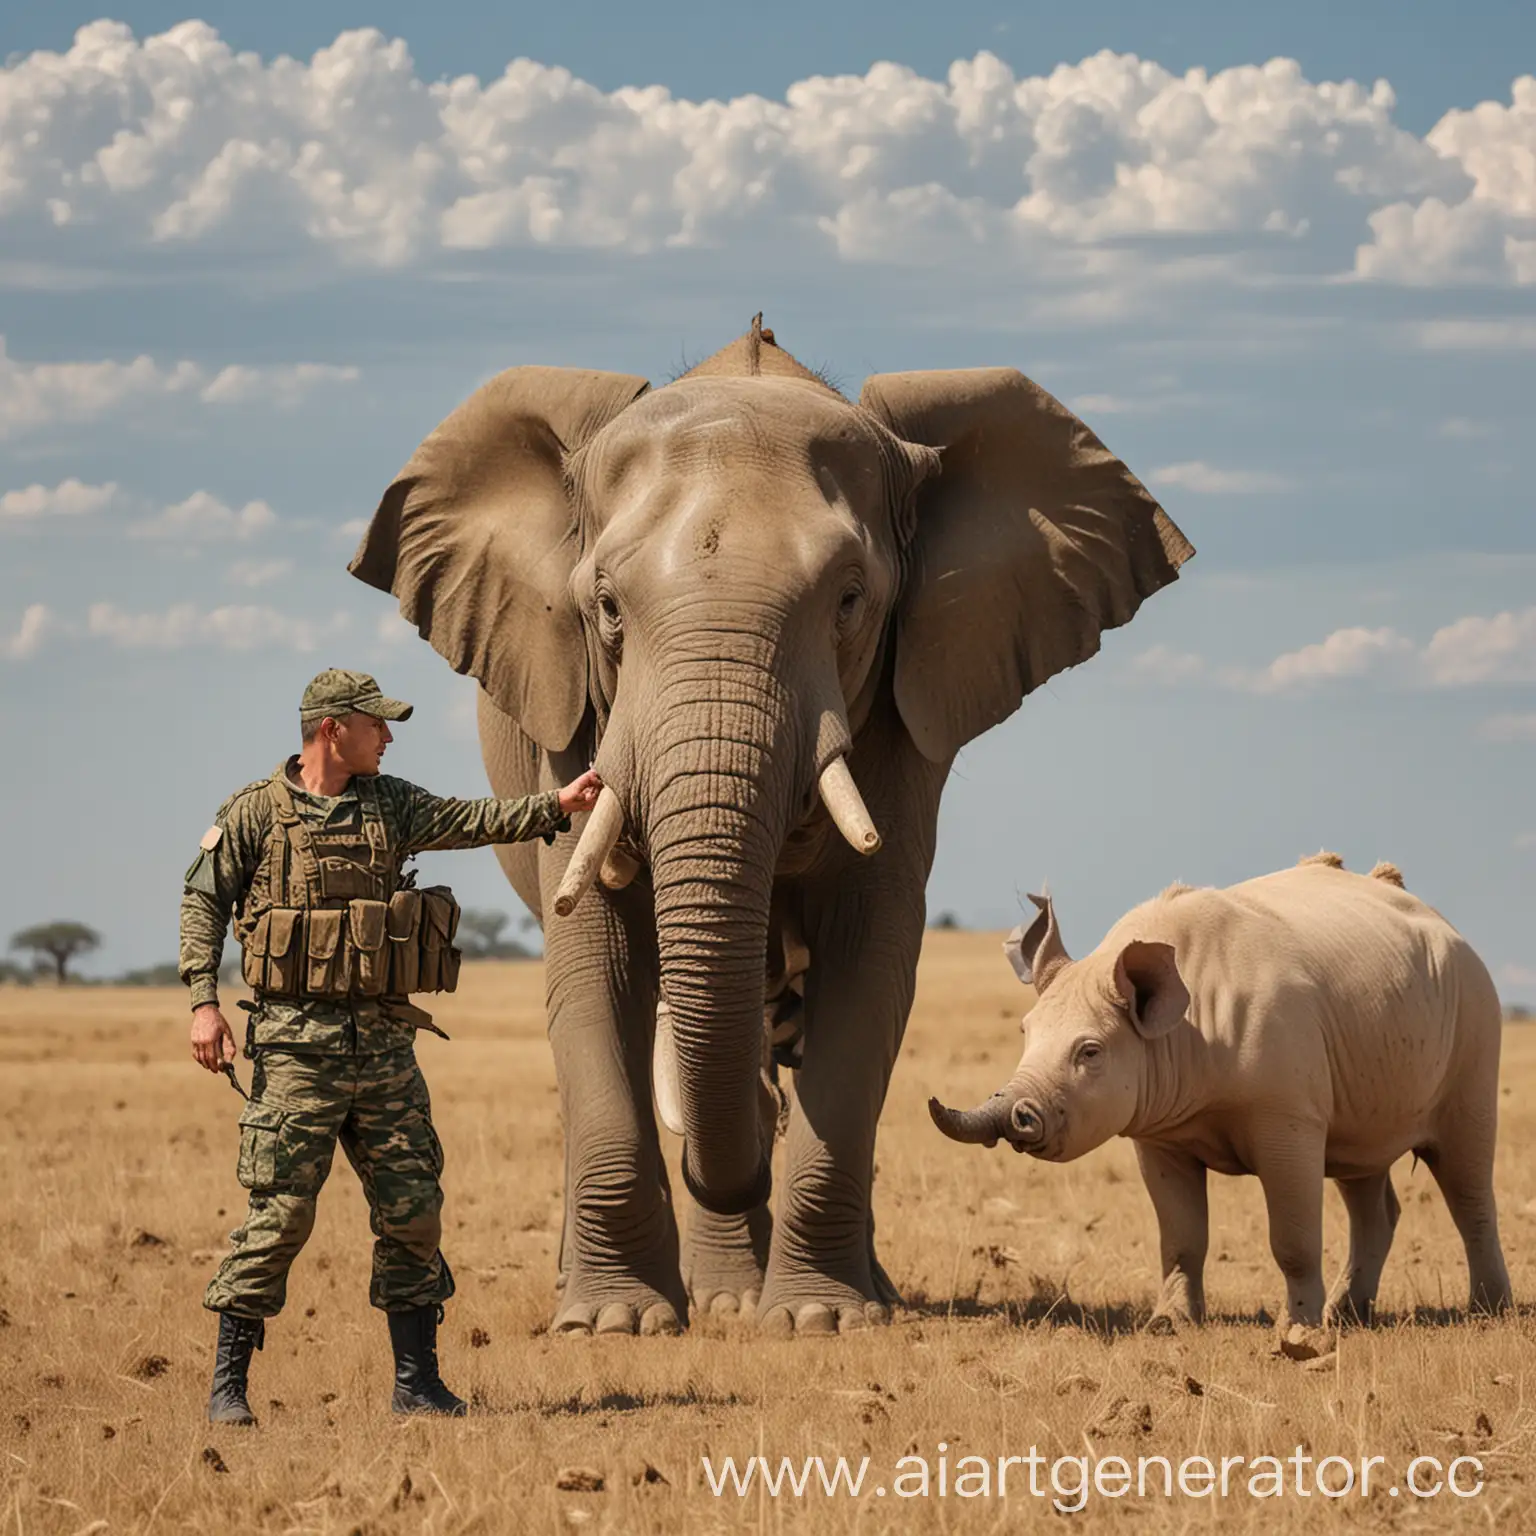 PigHeaded-Soldier-Challenges-ElephantHeaded-Opponent-Amidst-Saiga-Antelope-Habitat